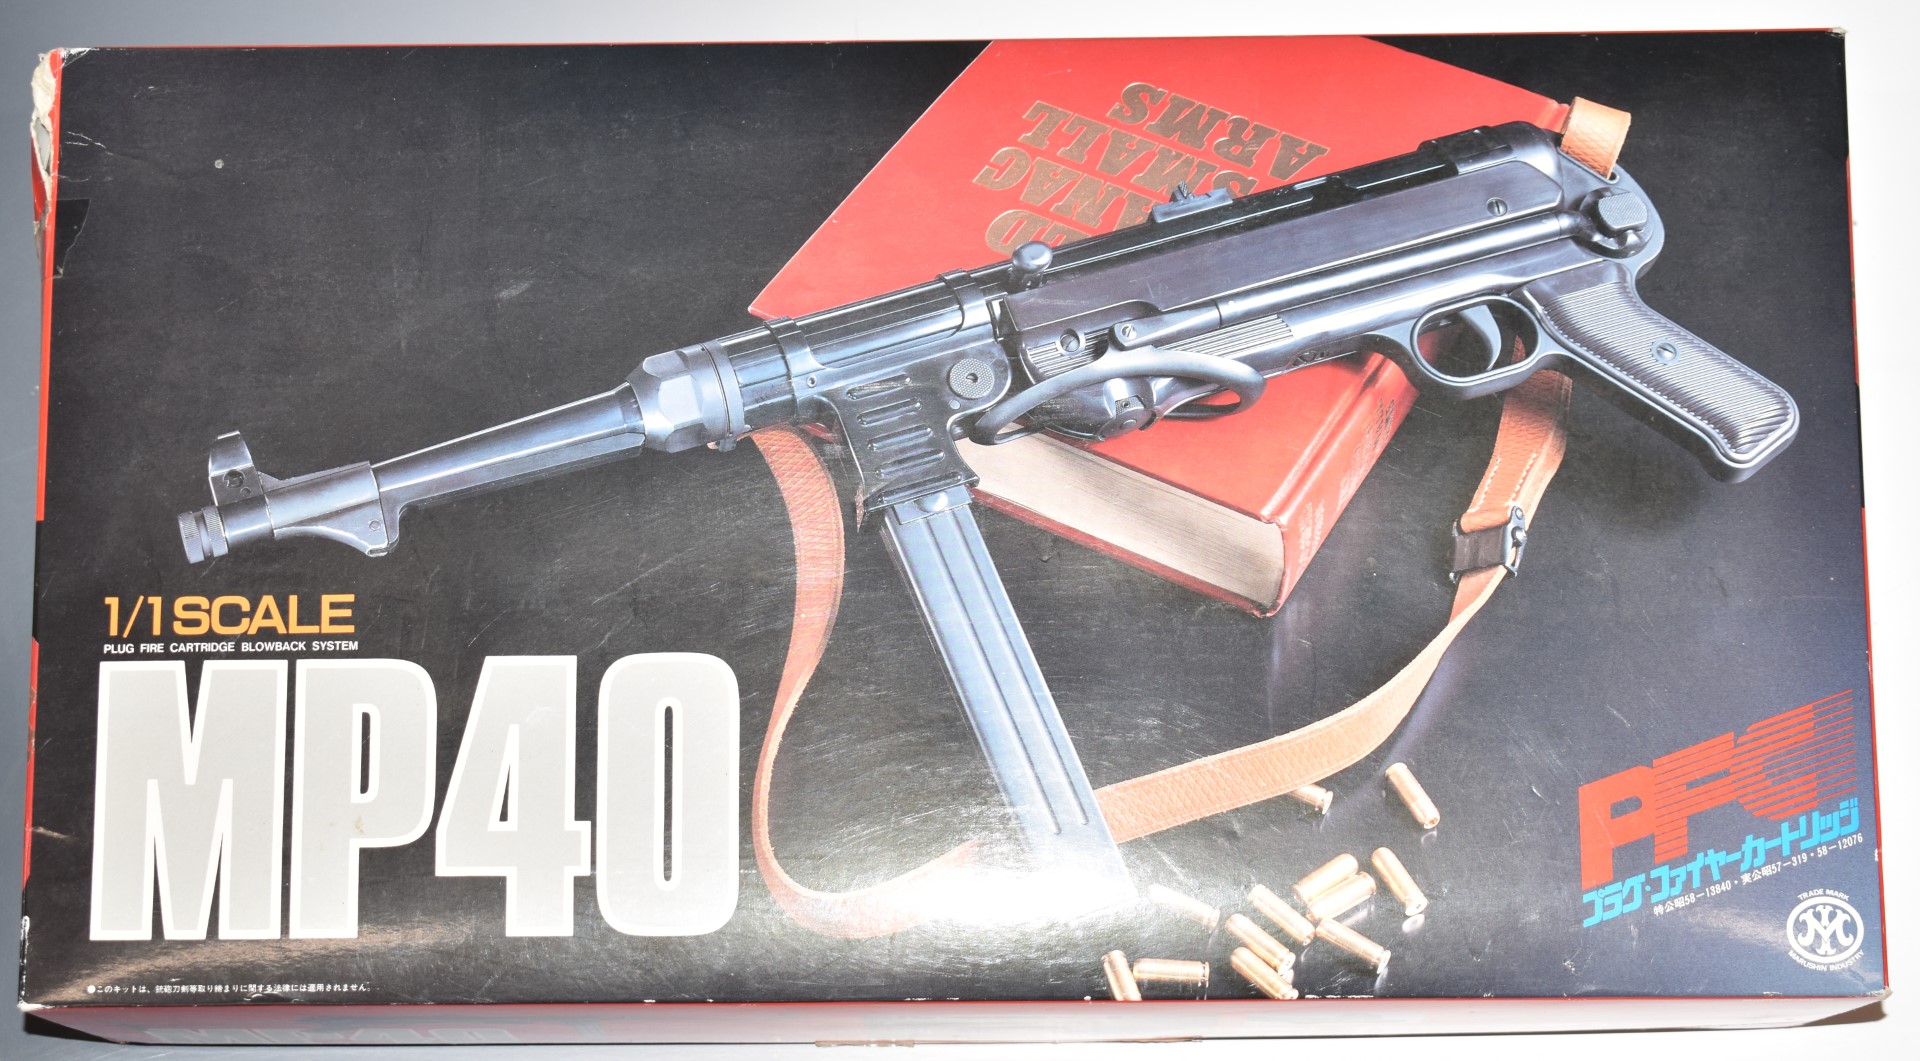 Marushin MP40 sub machine gun replica rifle with folding stock, extended magazine, pellet shells - Image 8 of 8